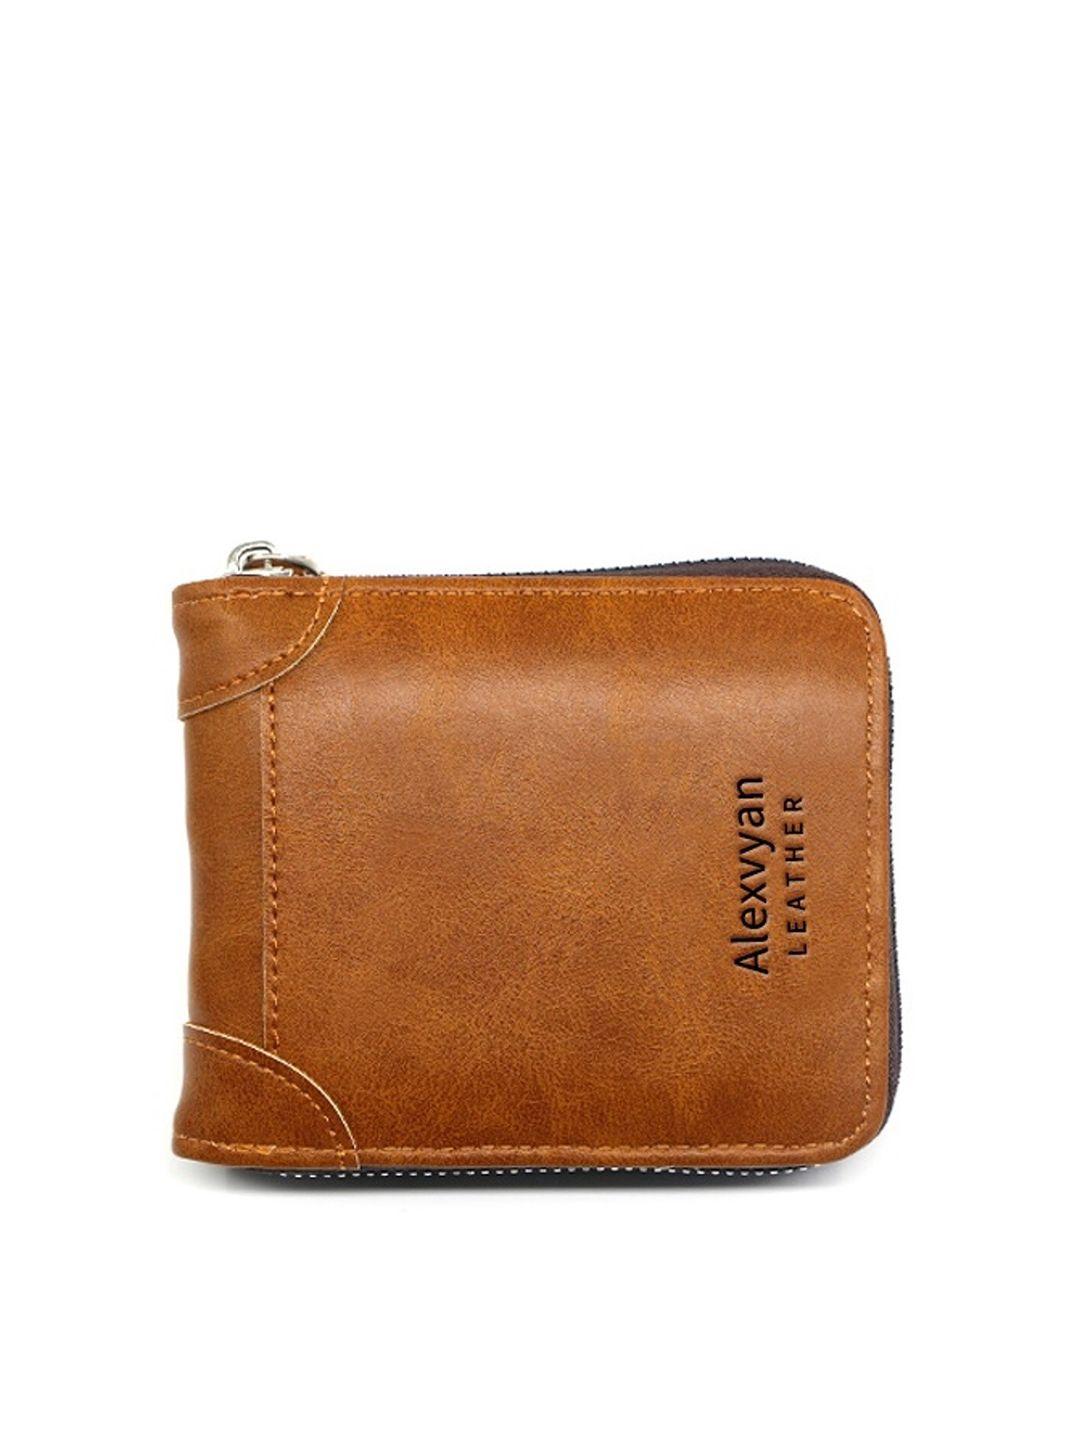 alexvyan men leather zip around wallet